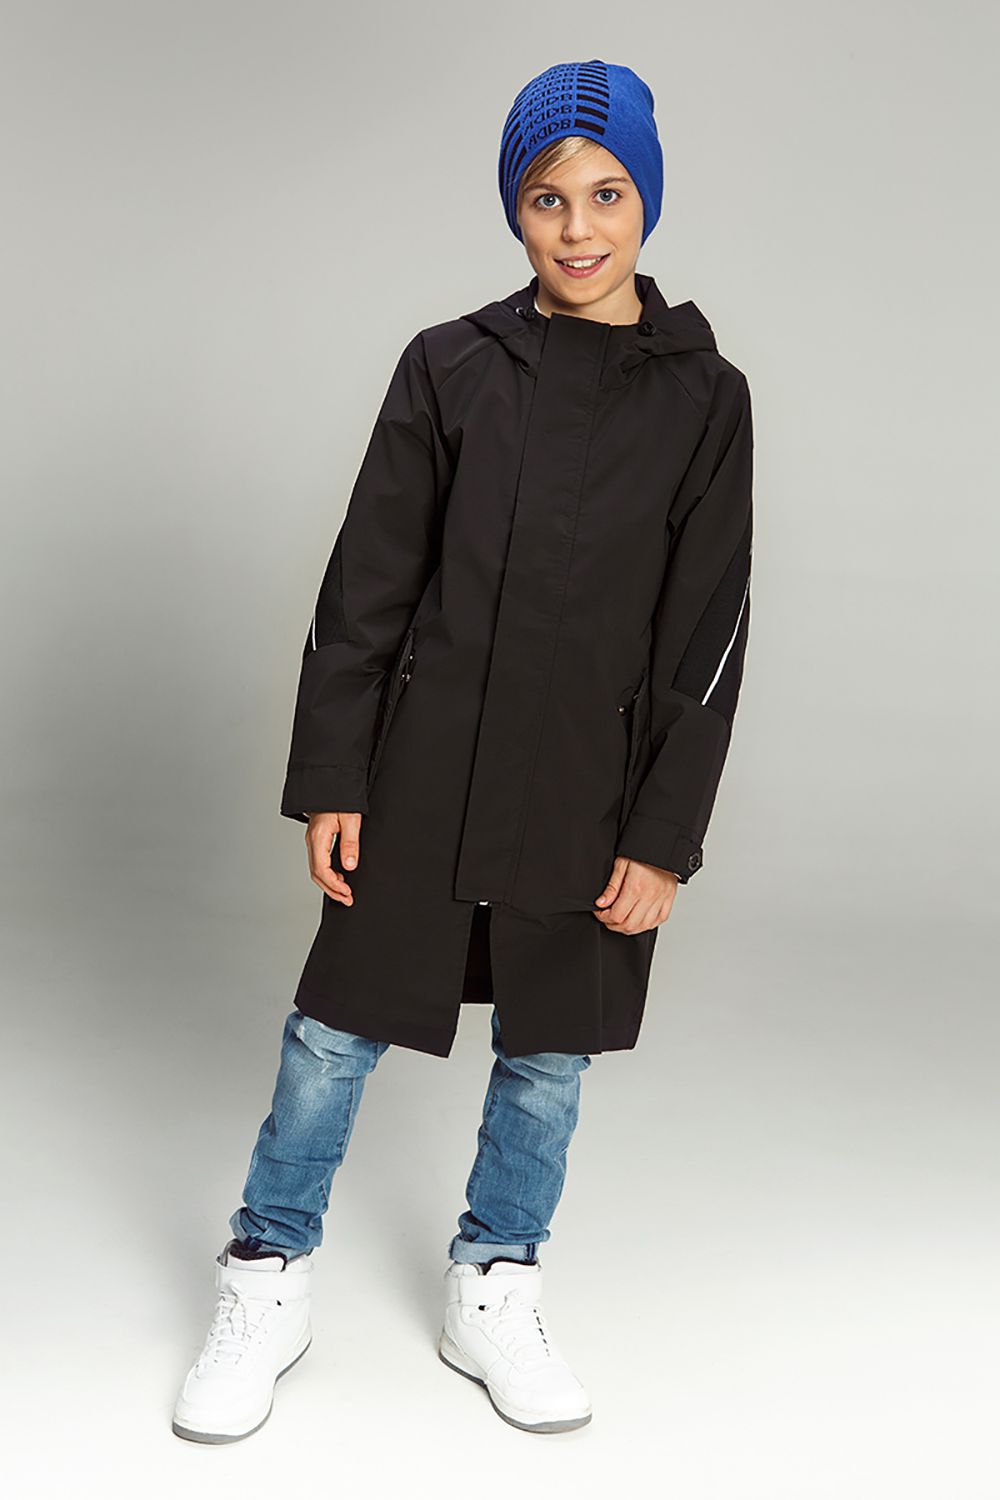 Куртка Noble People, размер 128, цвет черный 18607-518 - фото 6